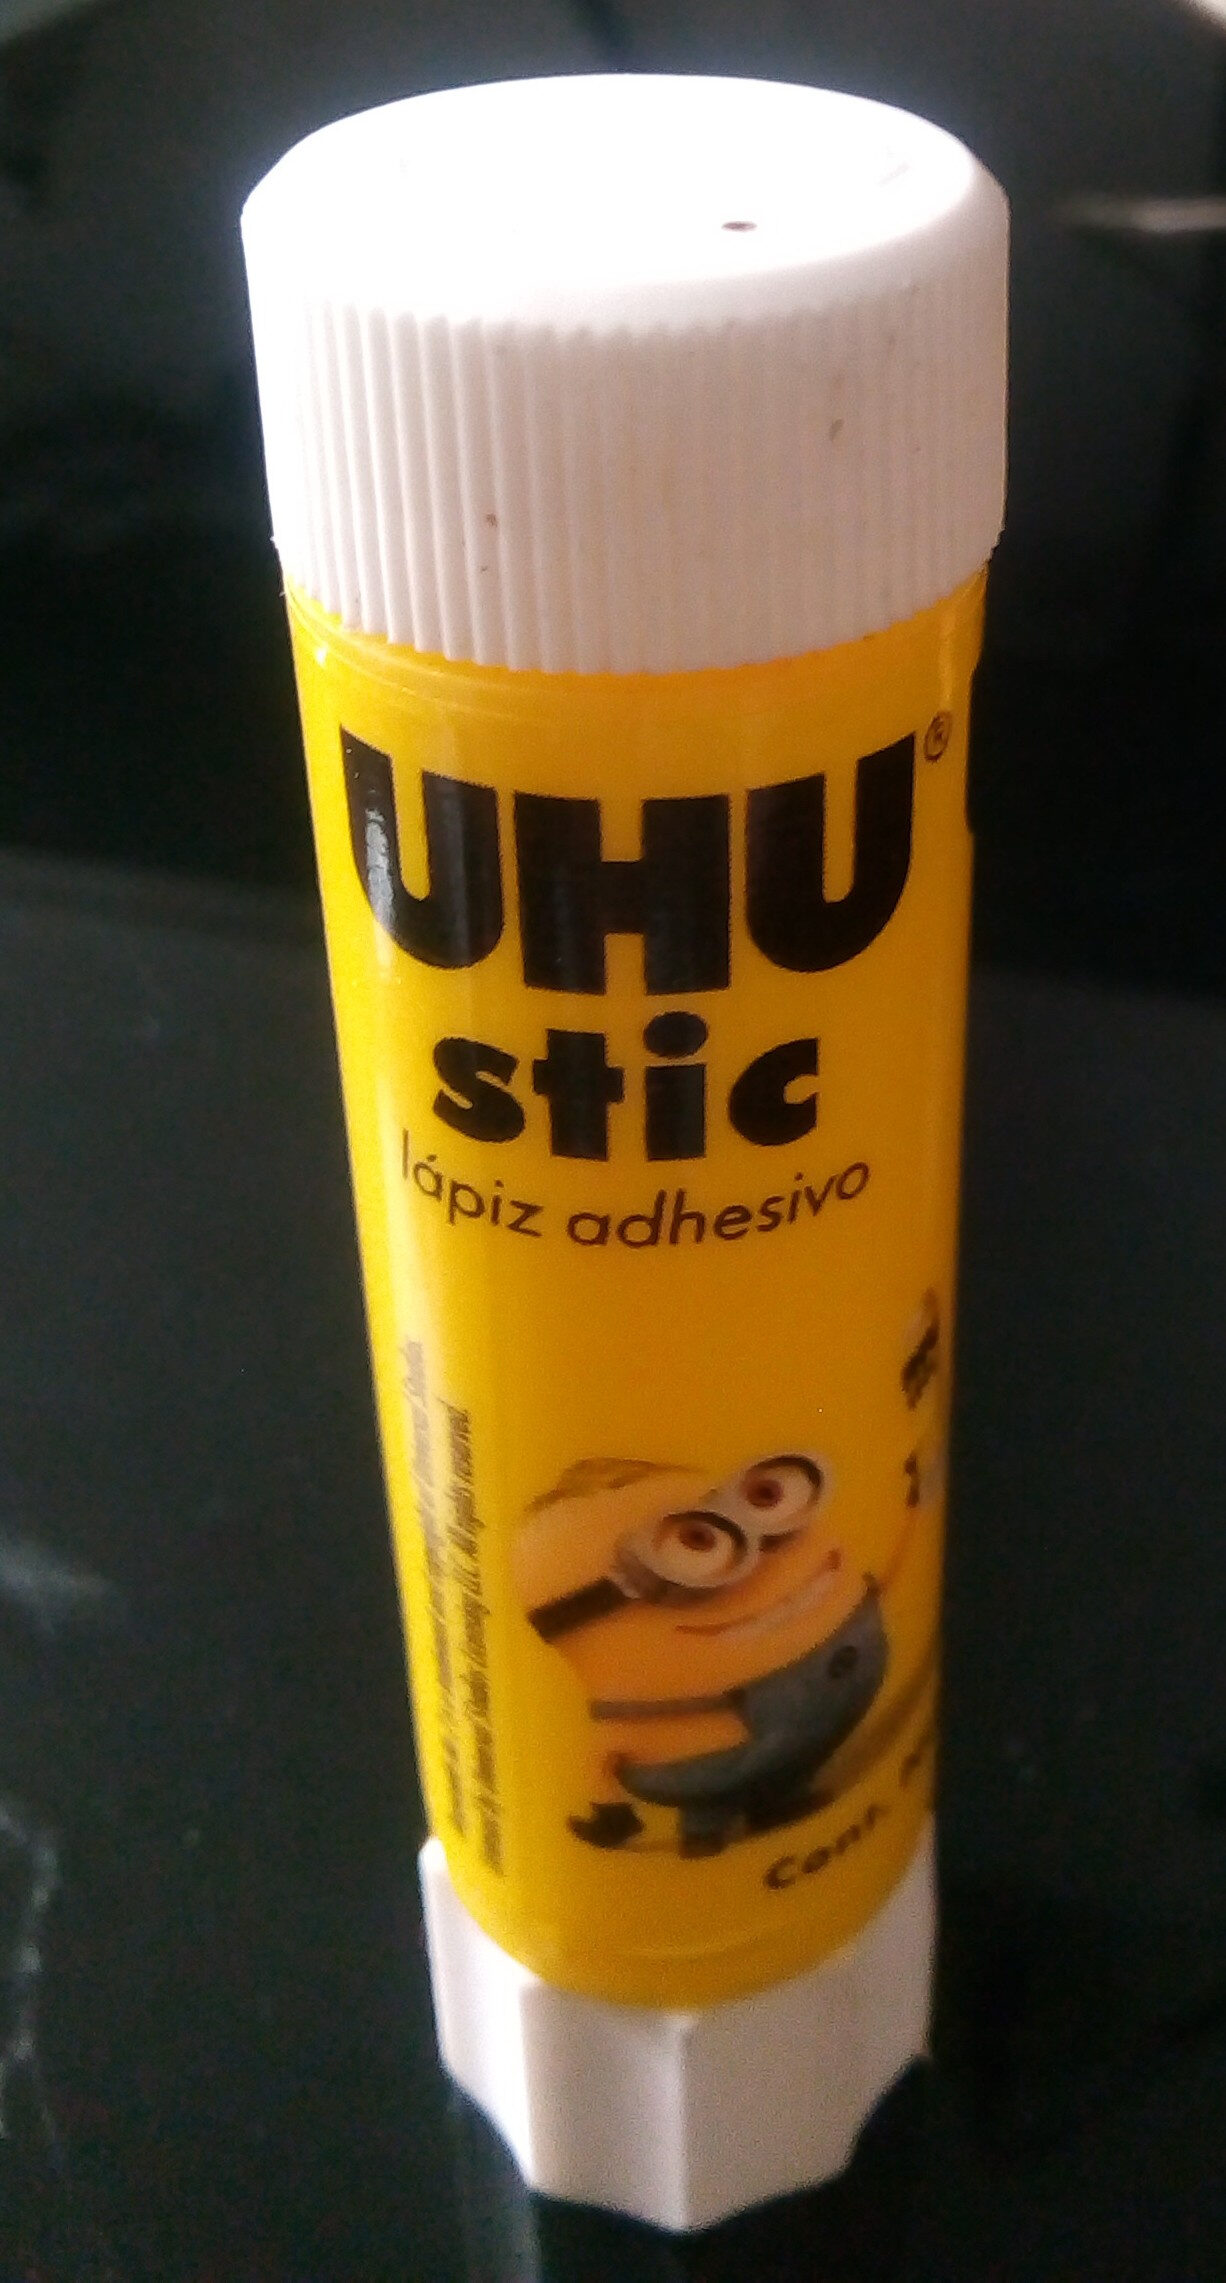 UHU stic - Product - es